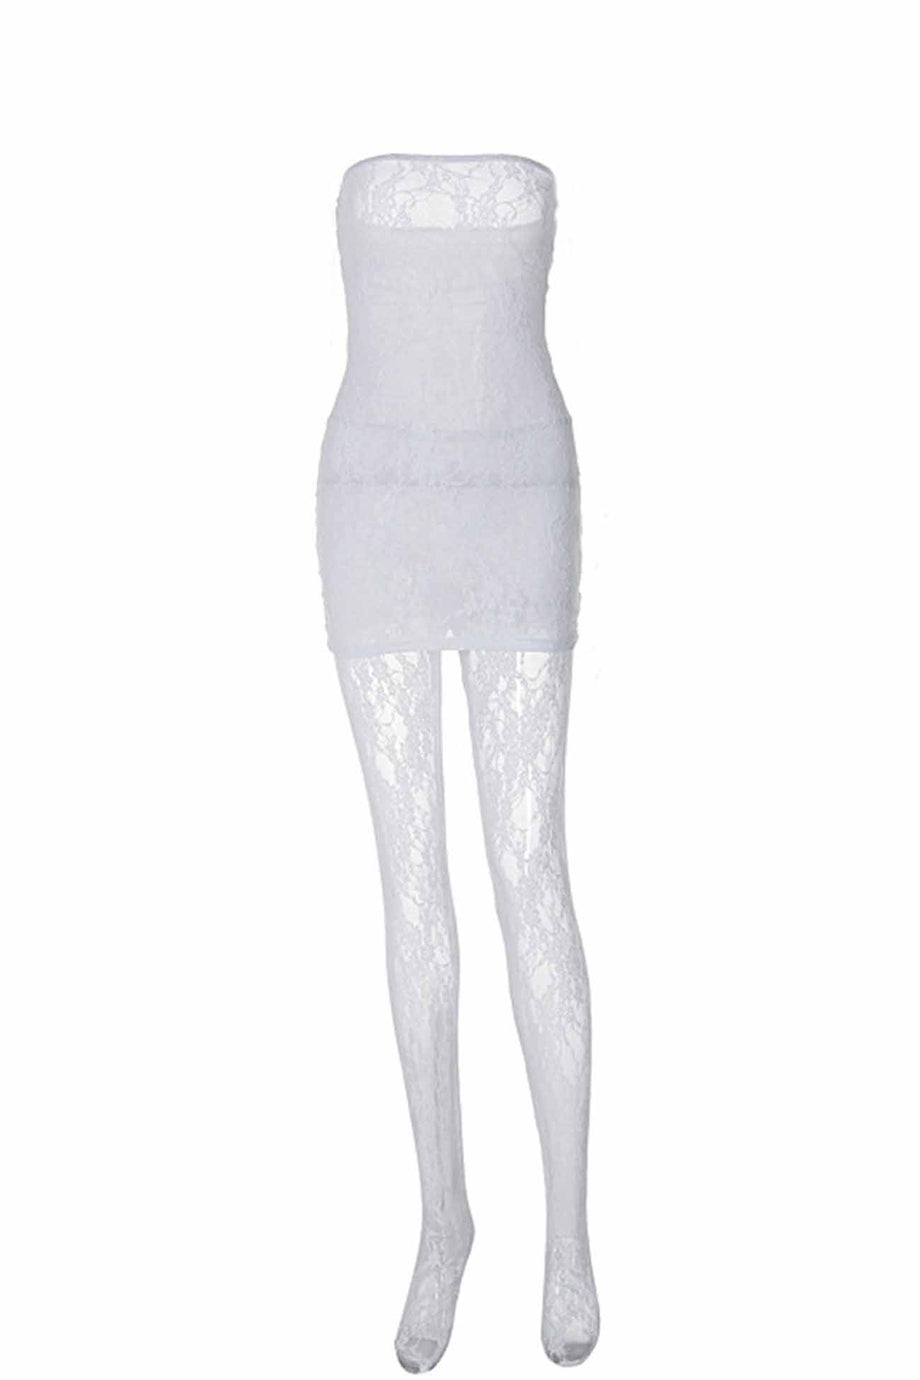 ARKET Lace Leggings in Off-White